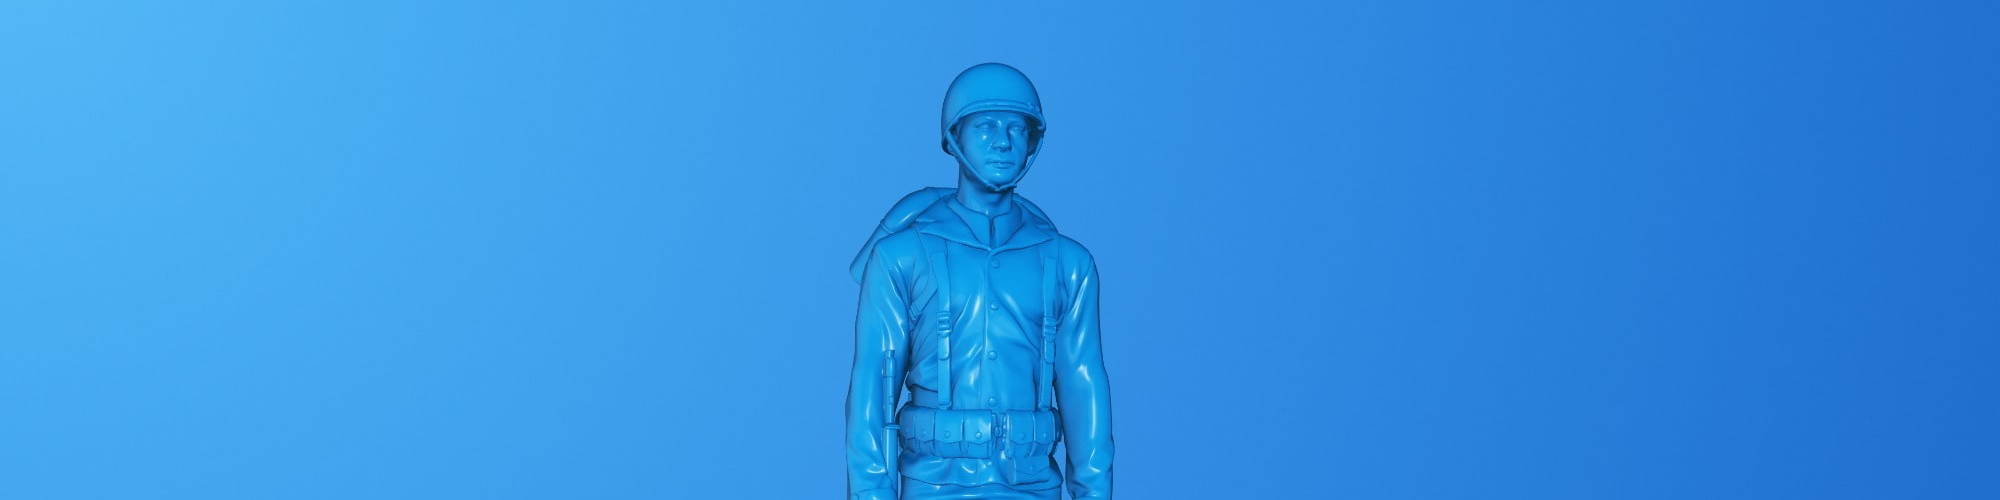 Blue Soldier Blue Background